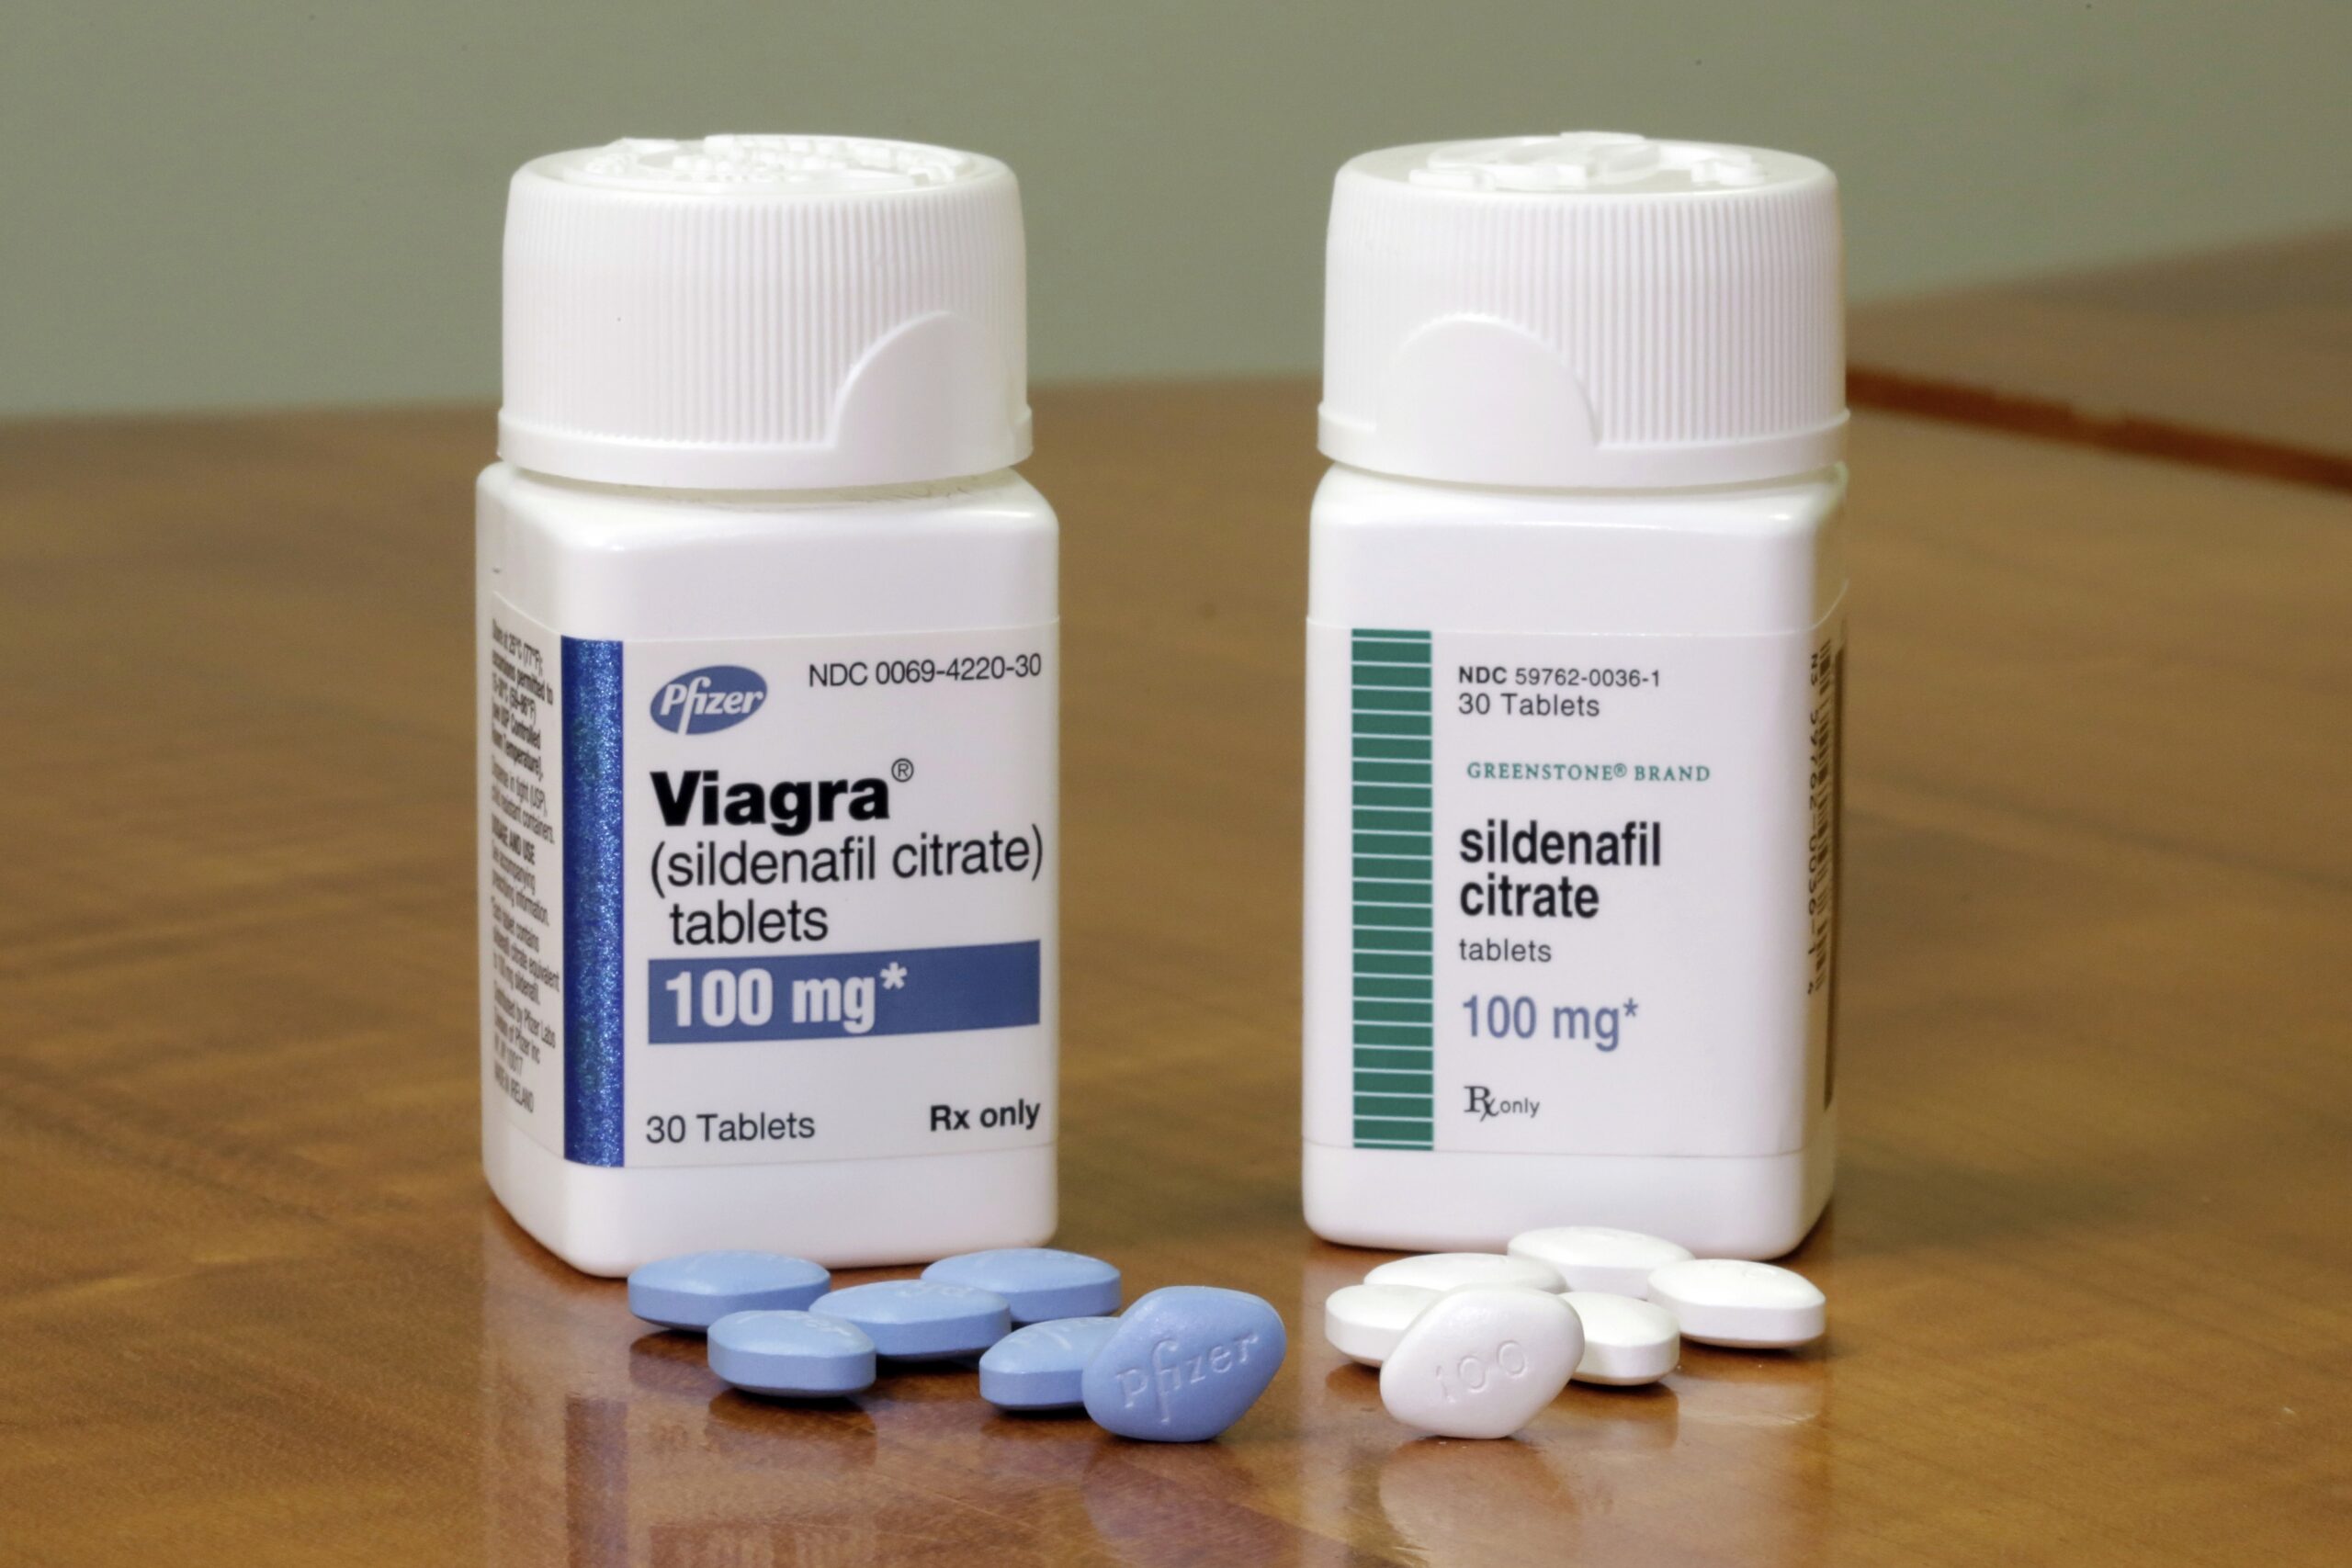 Viagra bottles and pills